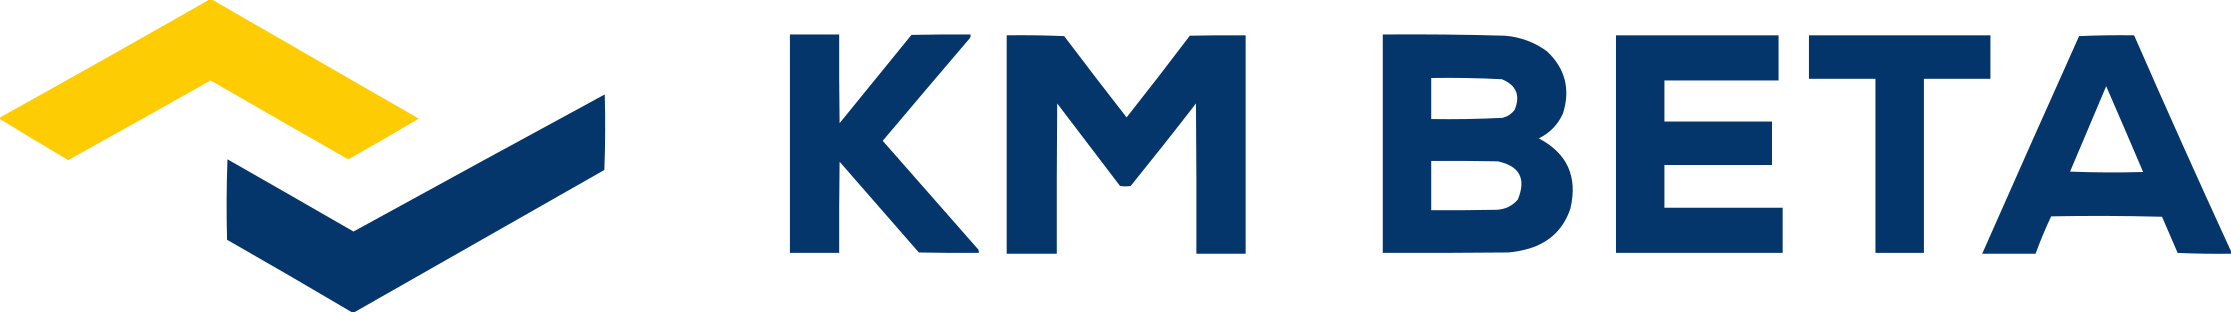 KM Beta logo